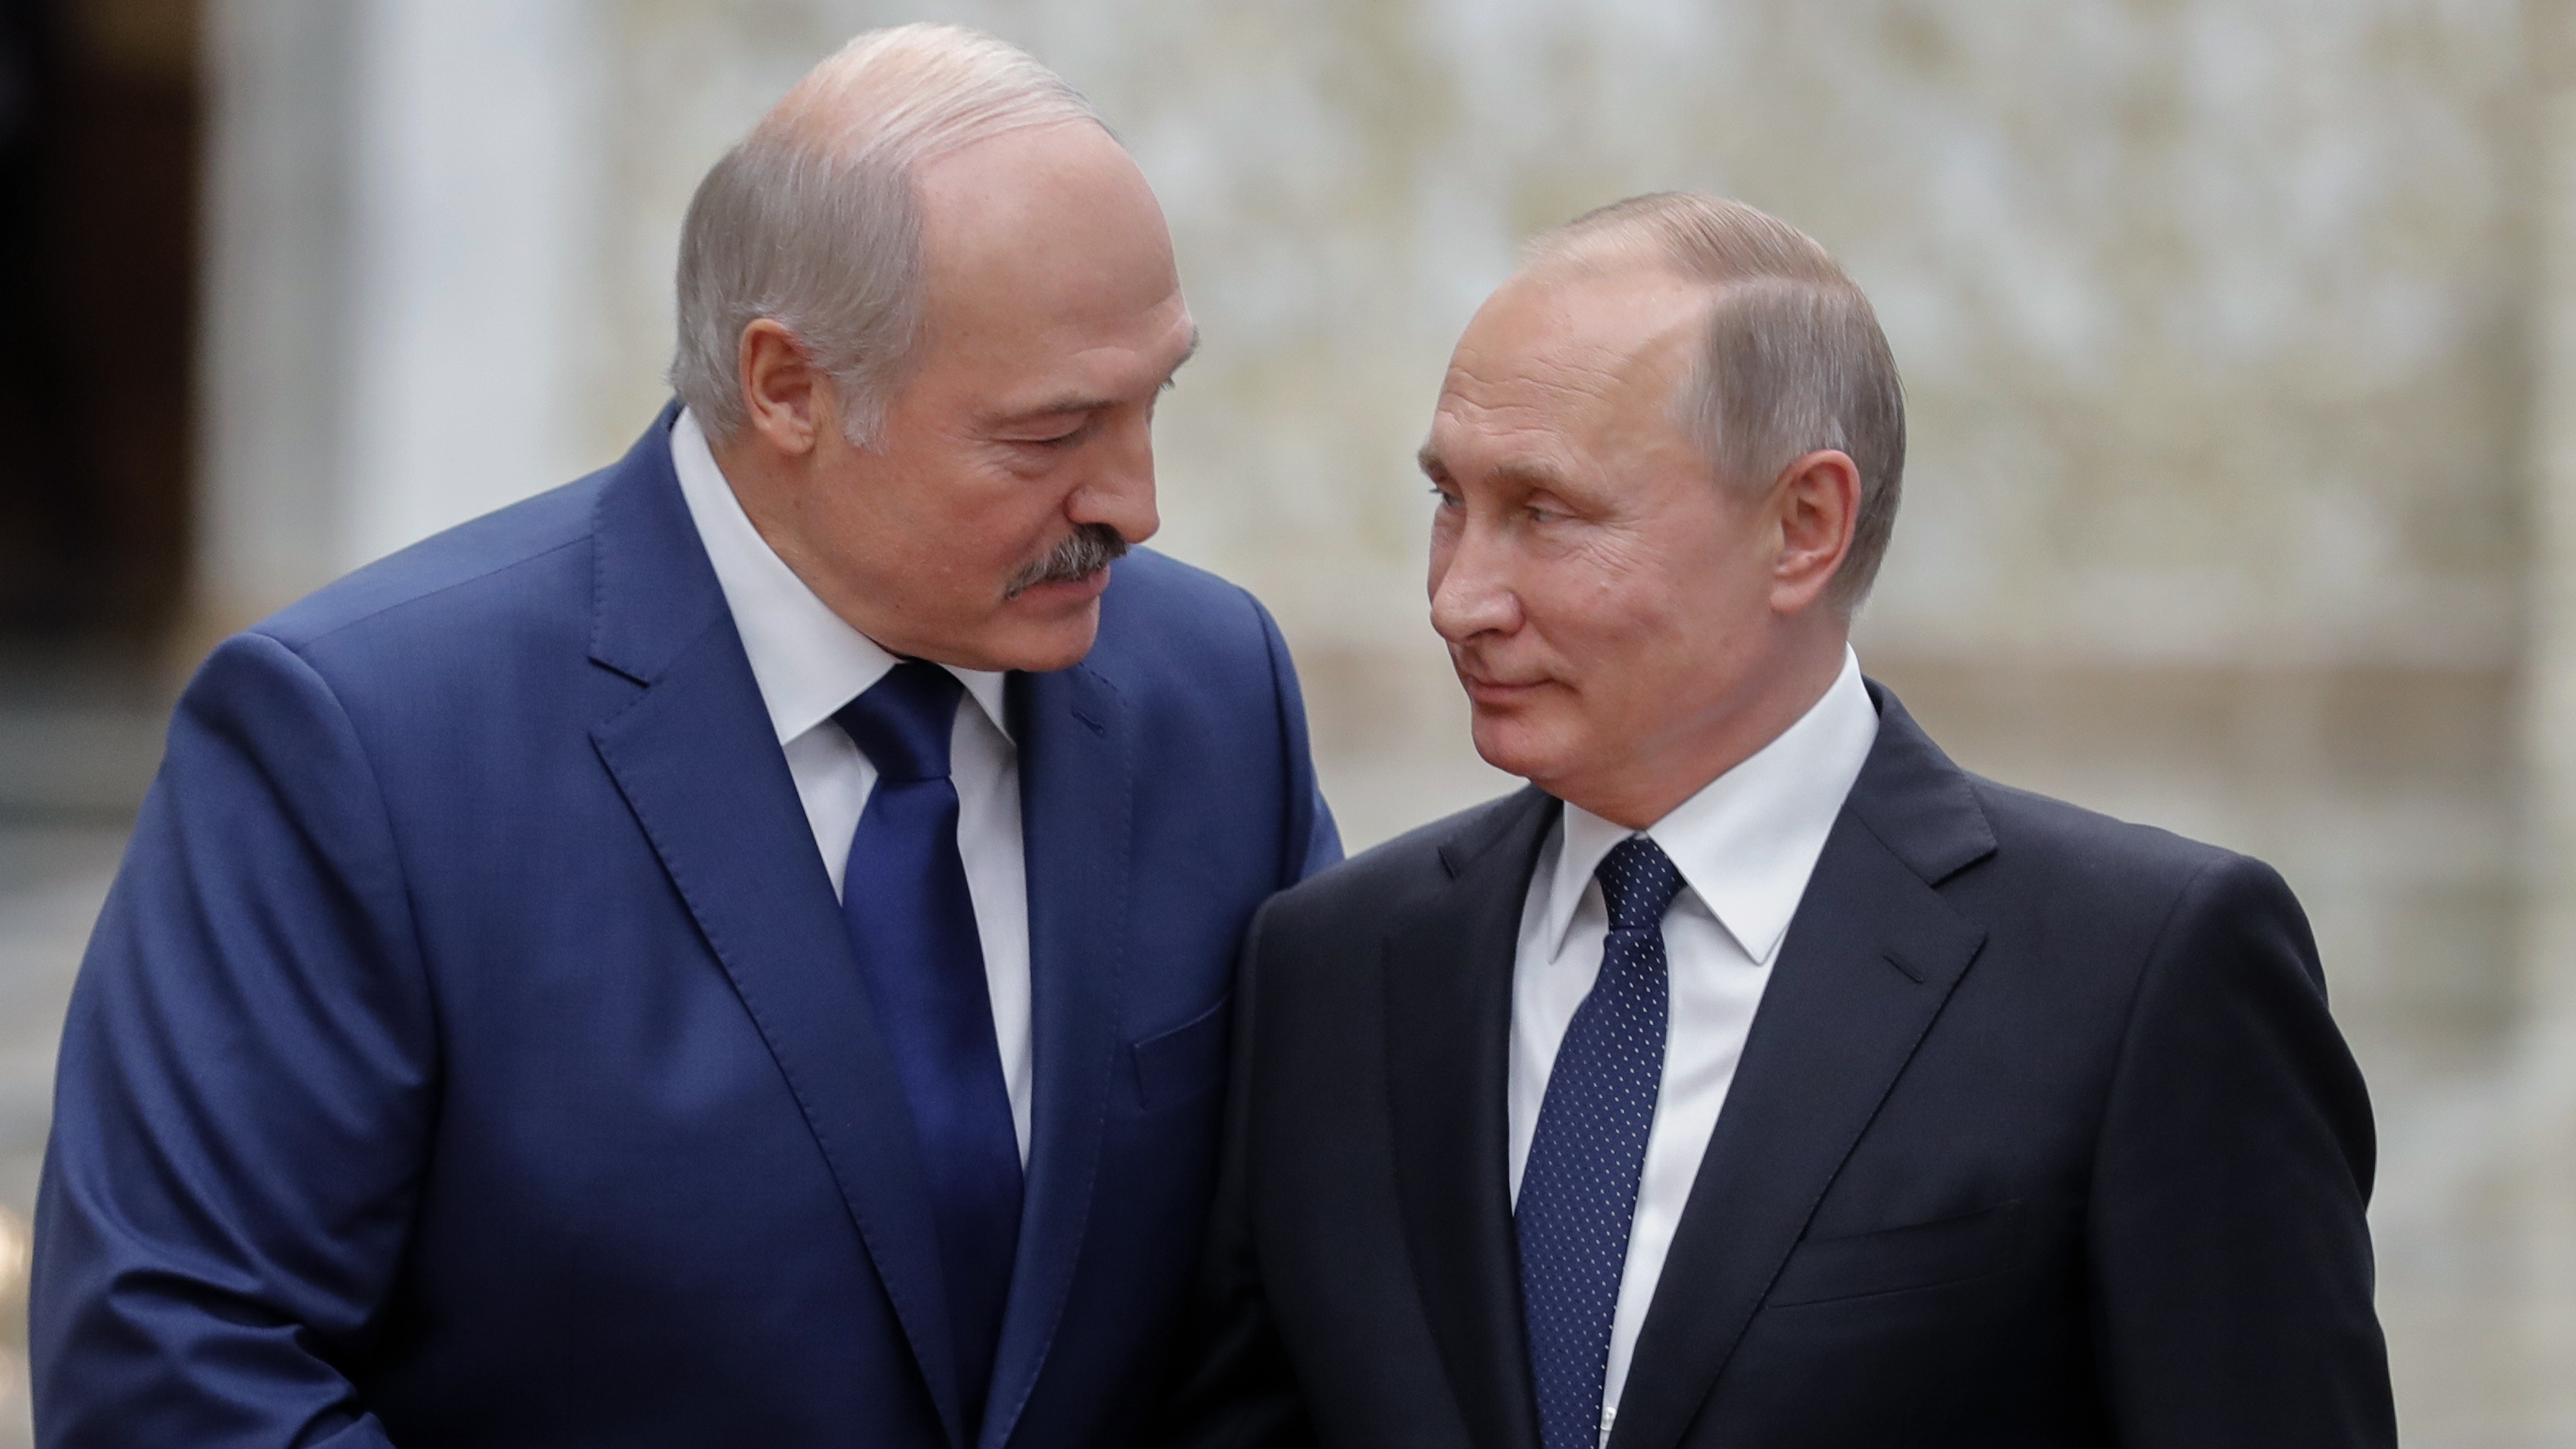 Alexander Lukashenko welcomes Vladimir Putin prior to a Collective Security Treaty Organisation summit in 2017